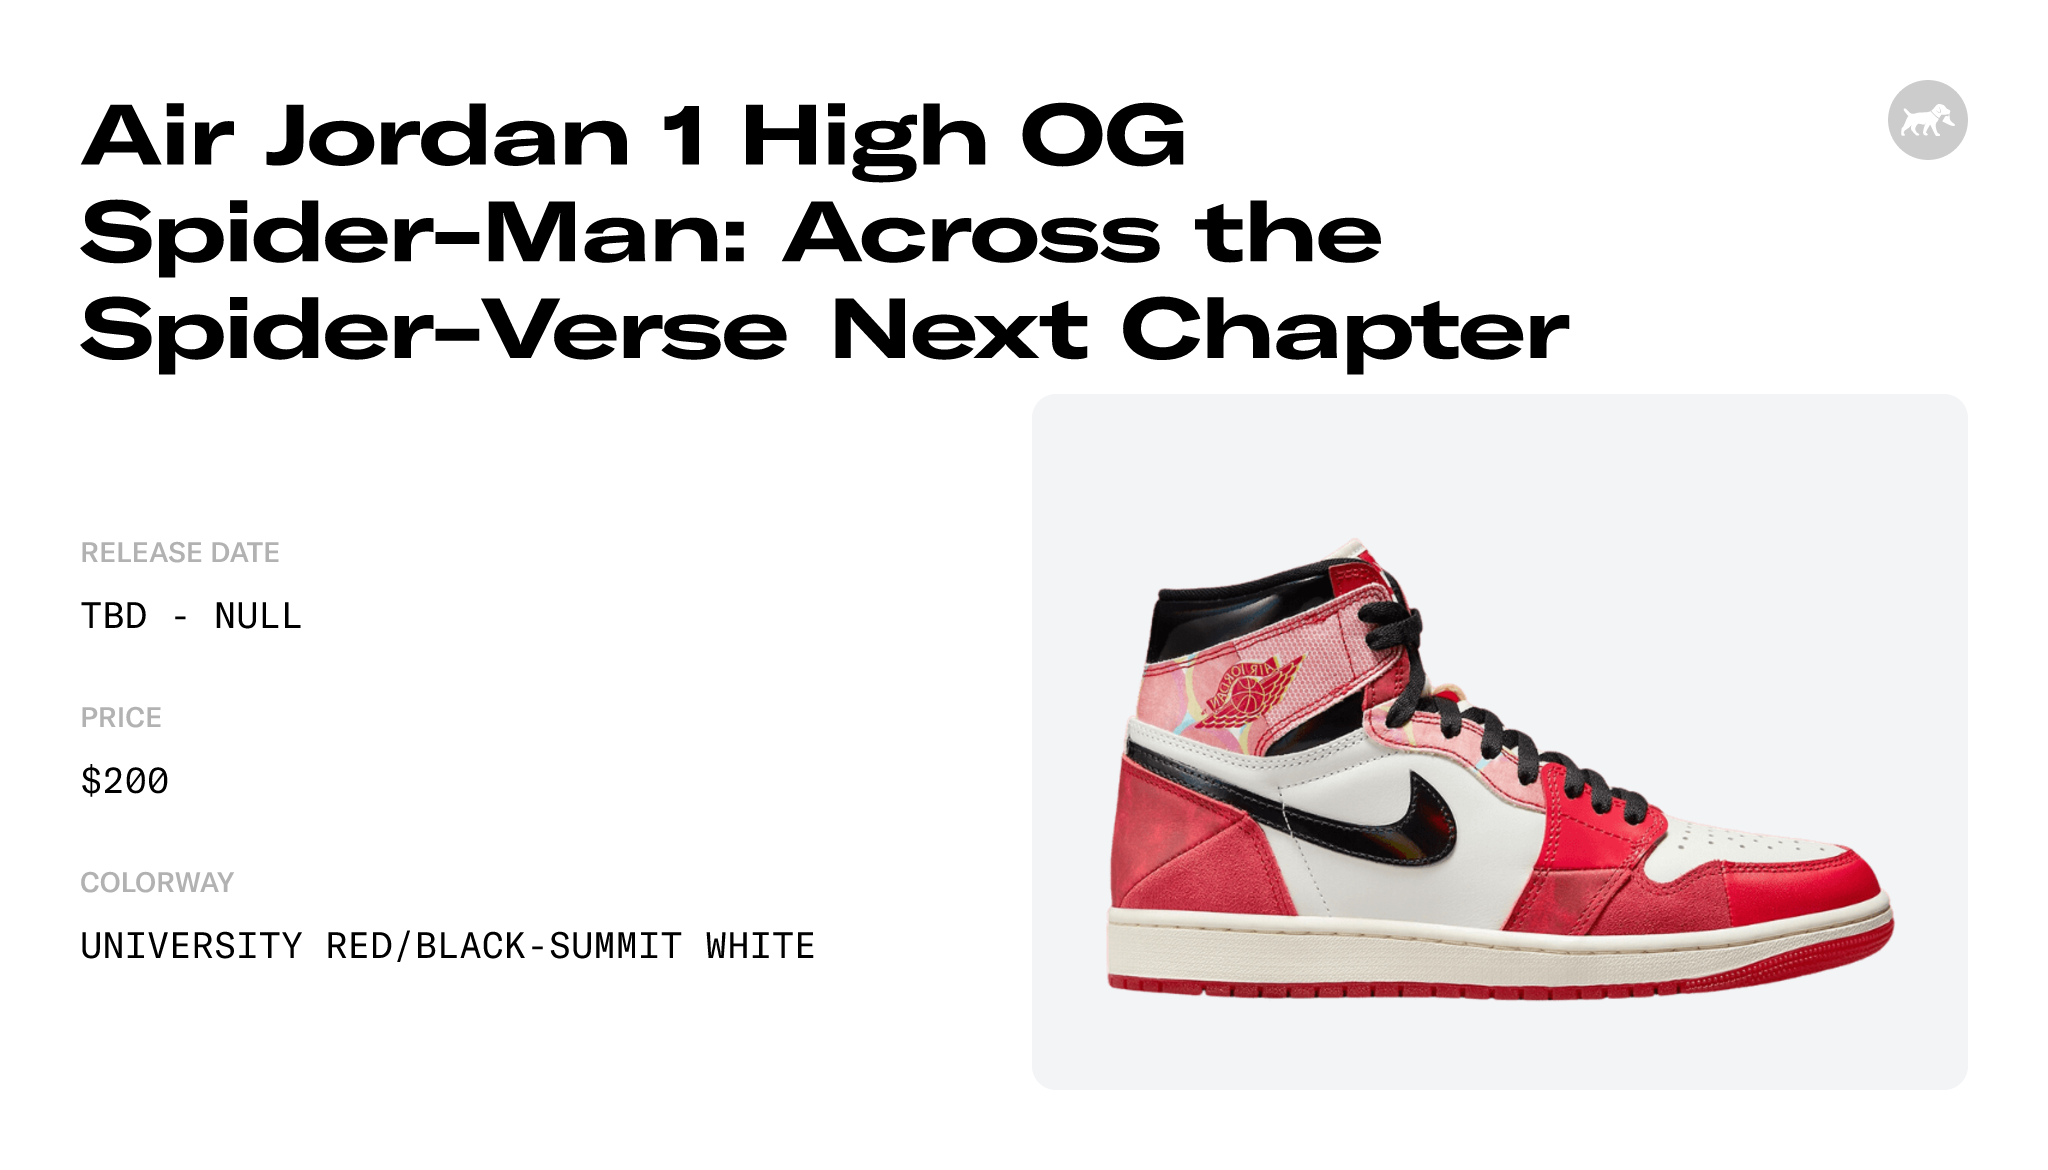 Air Jordan 1 High OG Spider-Man: Across the Spider-Verse Next Chapter  Raffles and Release Date